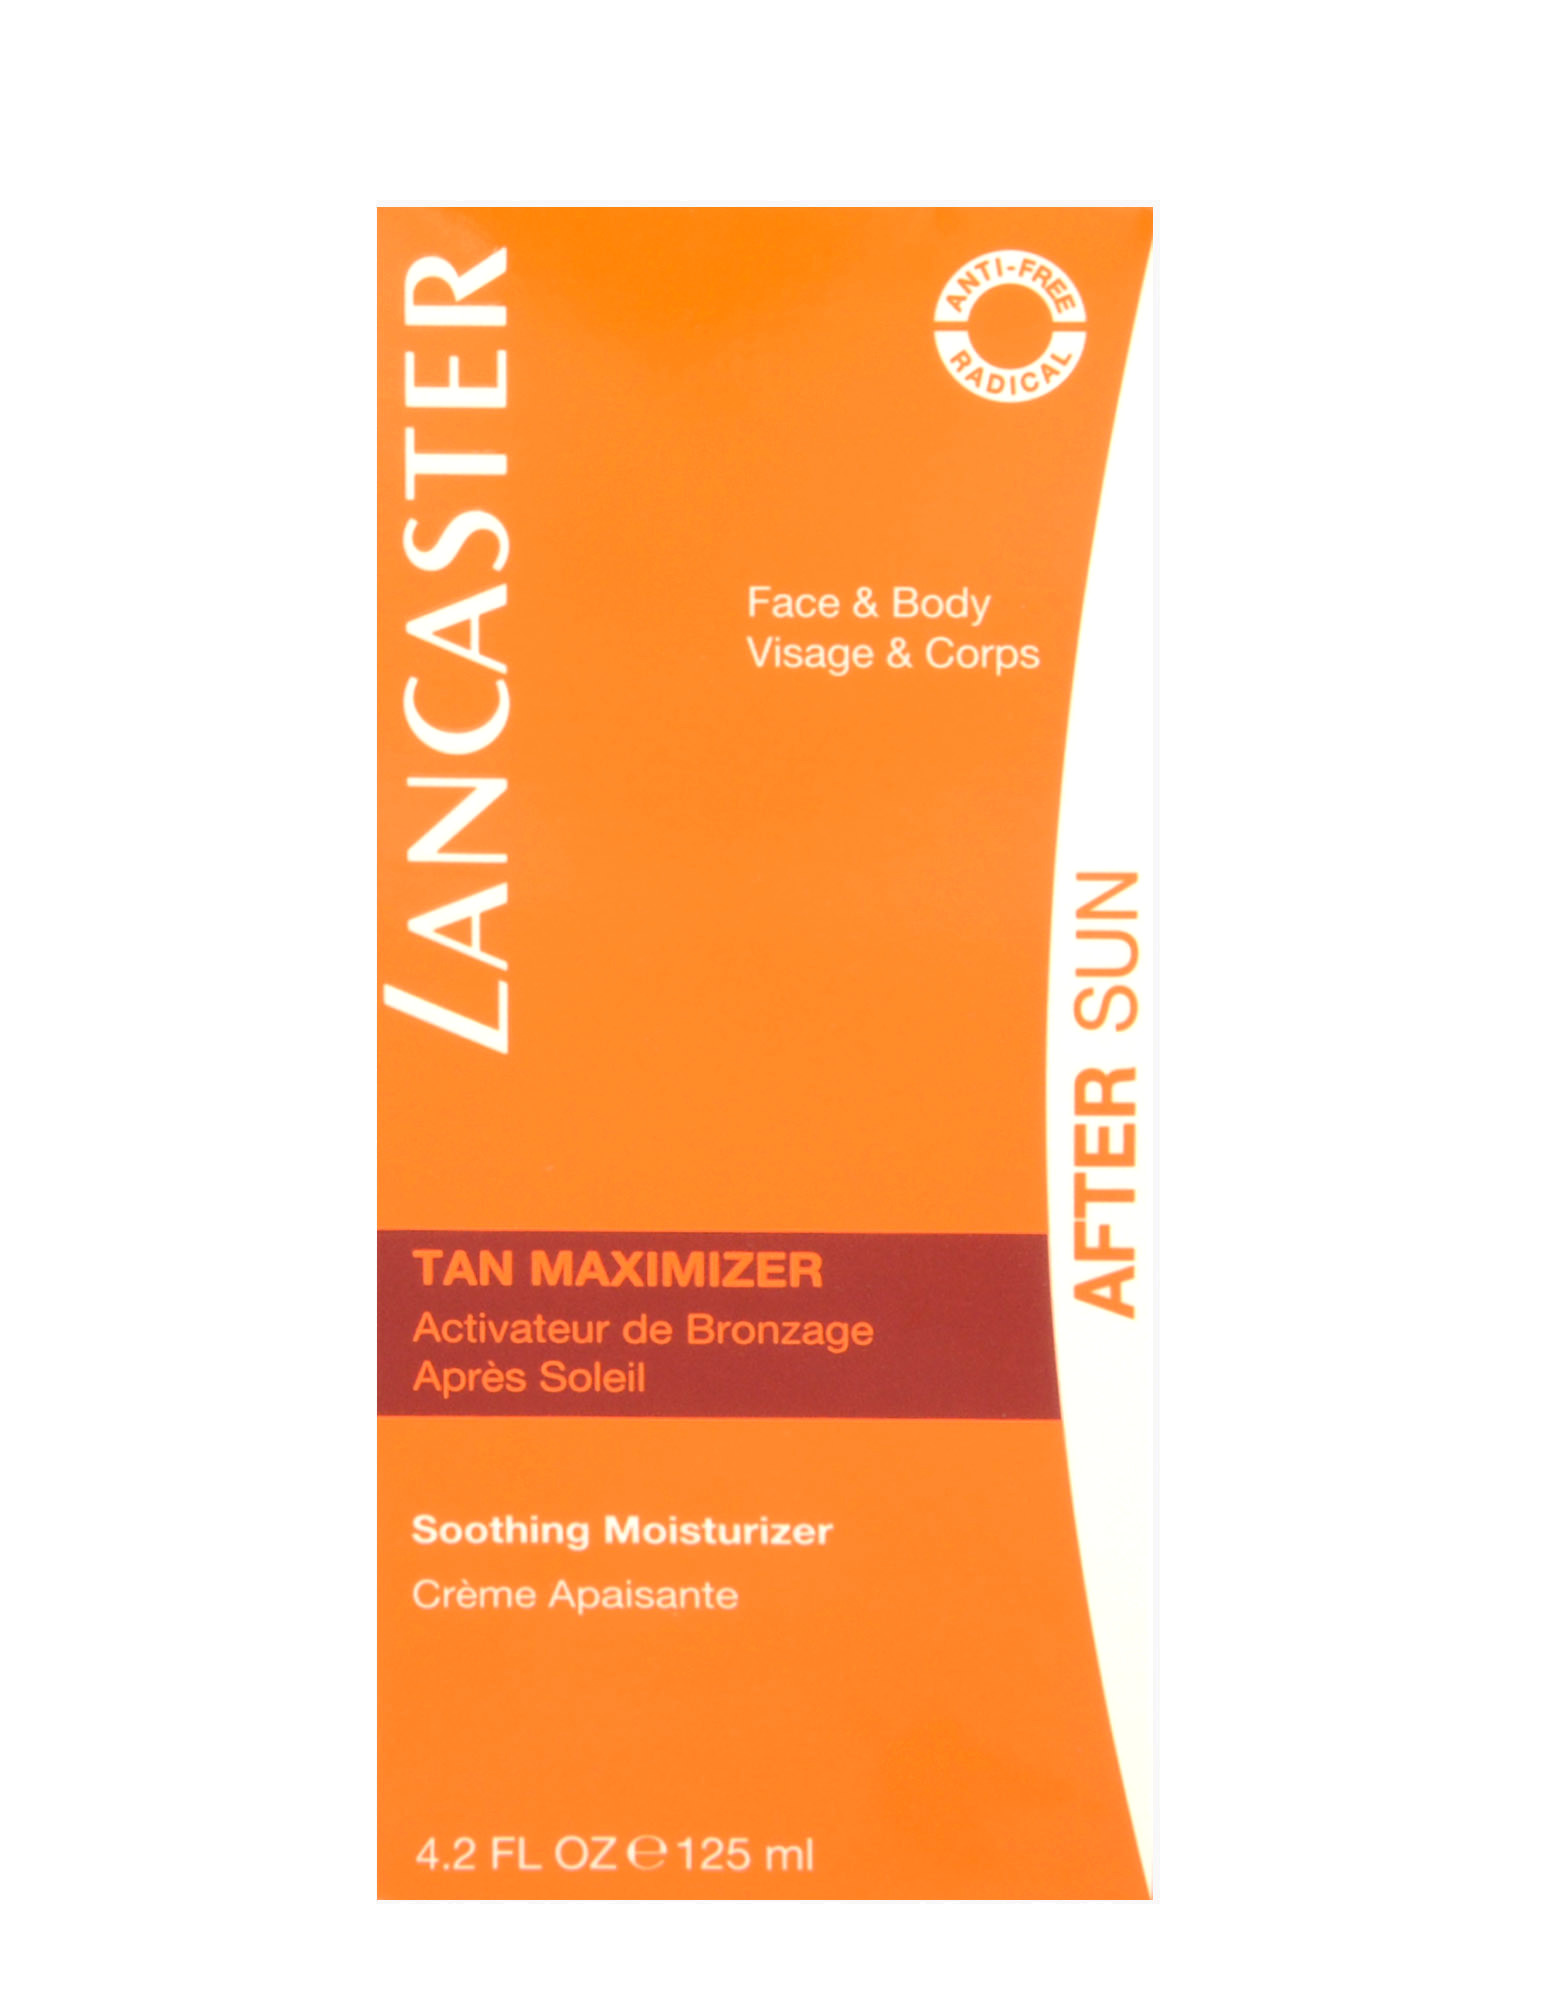 After Sun - Tan Maximizer Activator de Bronzage by Lancaster, 125ml